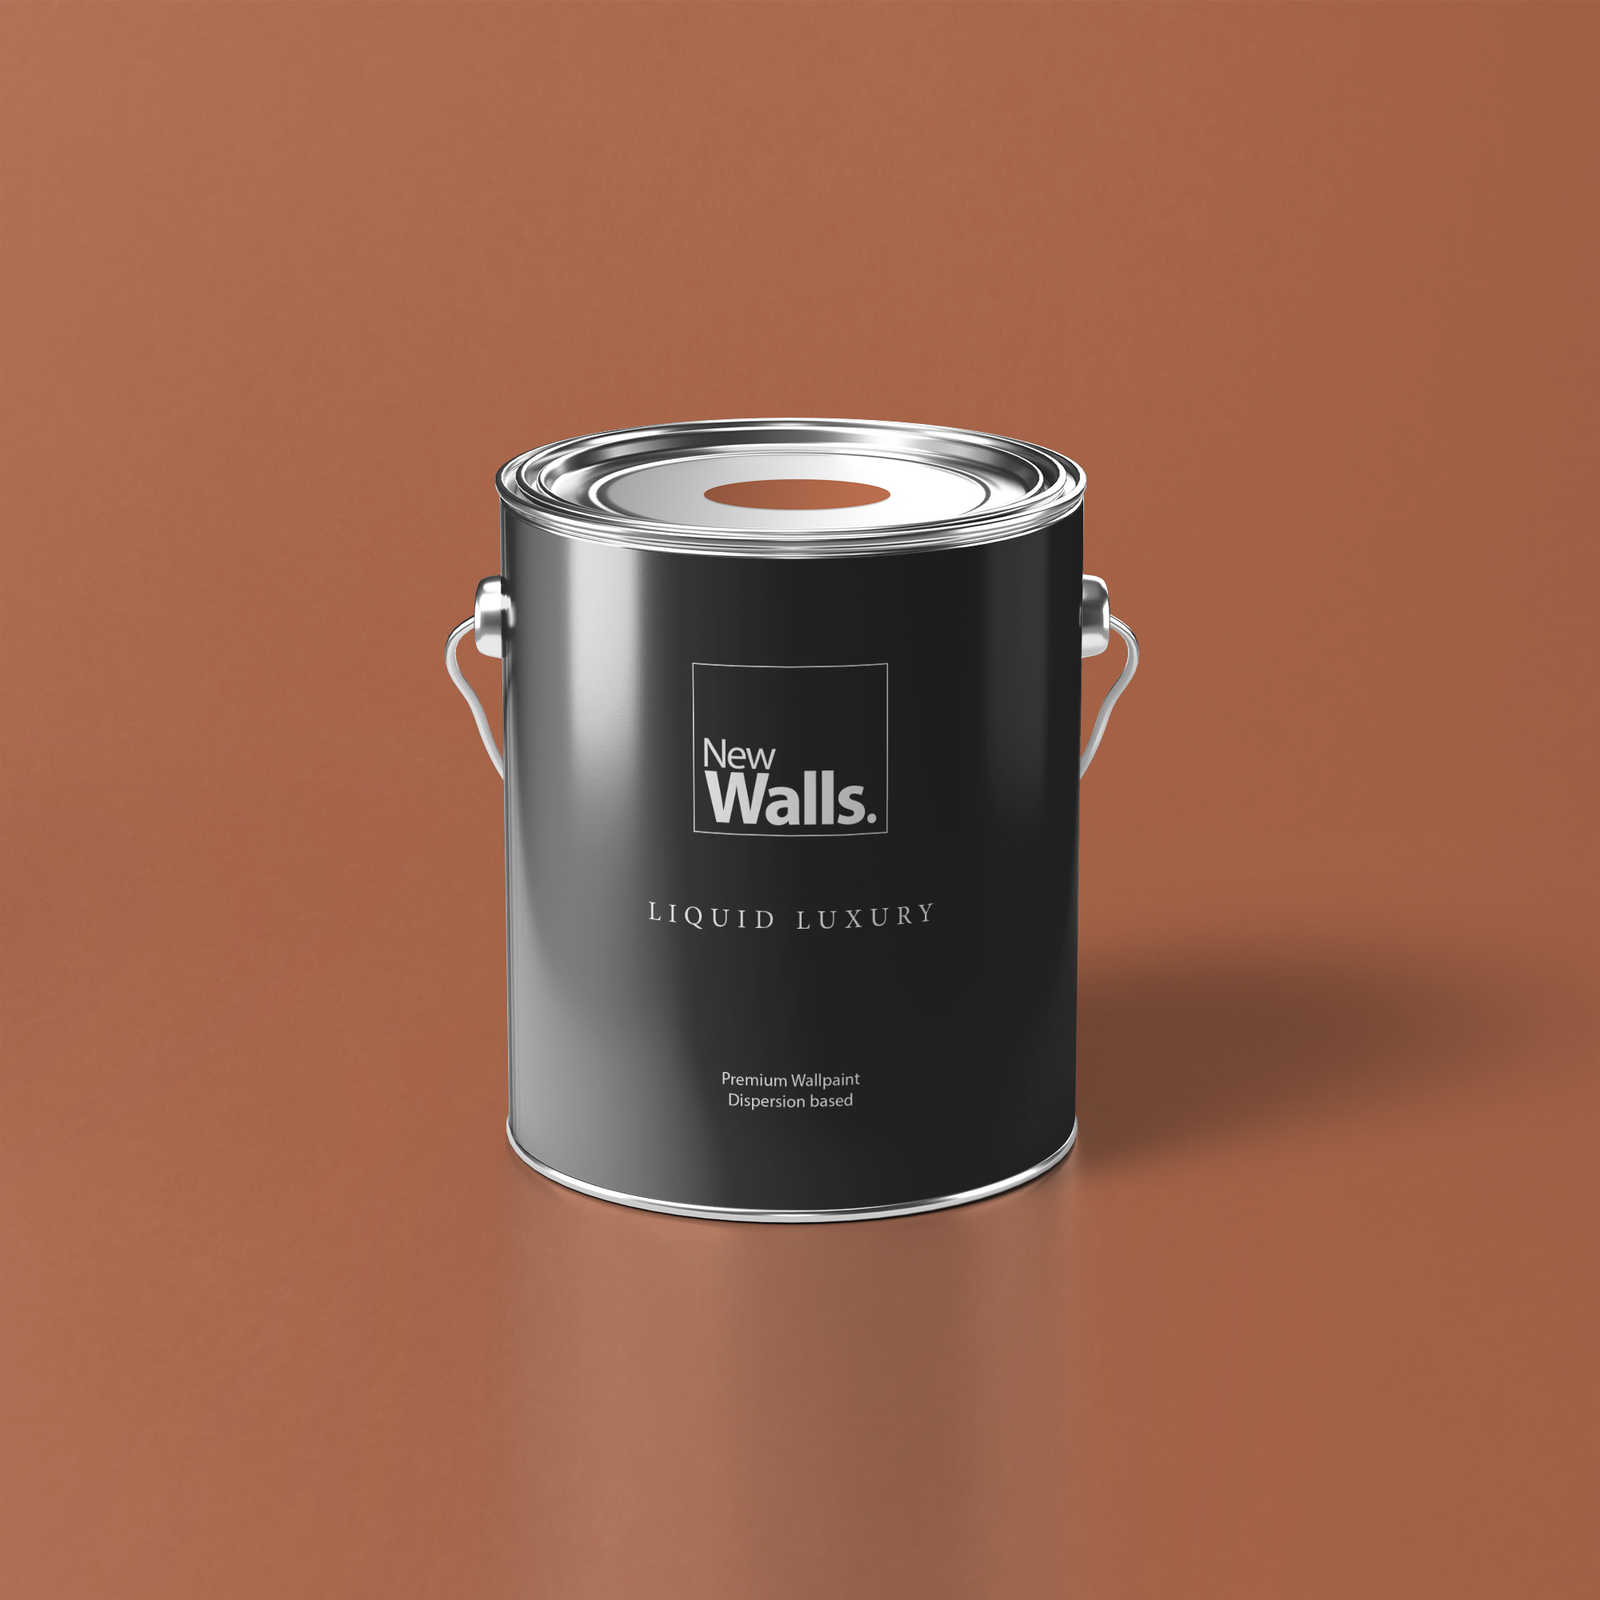 Premium Wall Paint stimulating copper »Pretty Peach« NW905 – 5 litre
